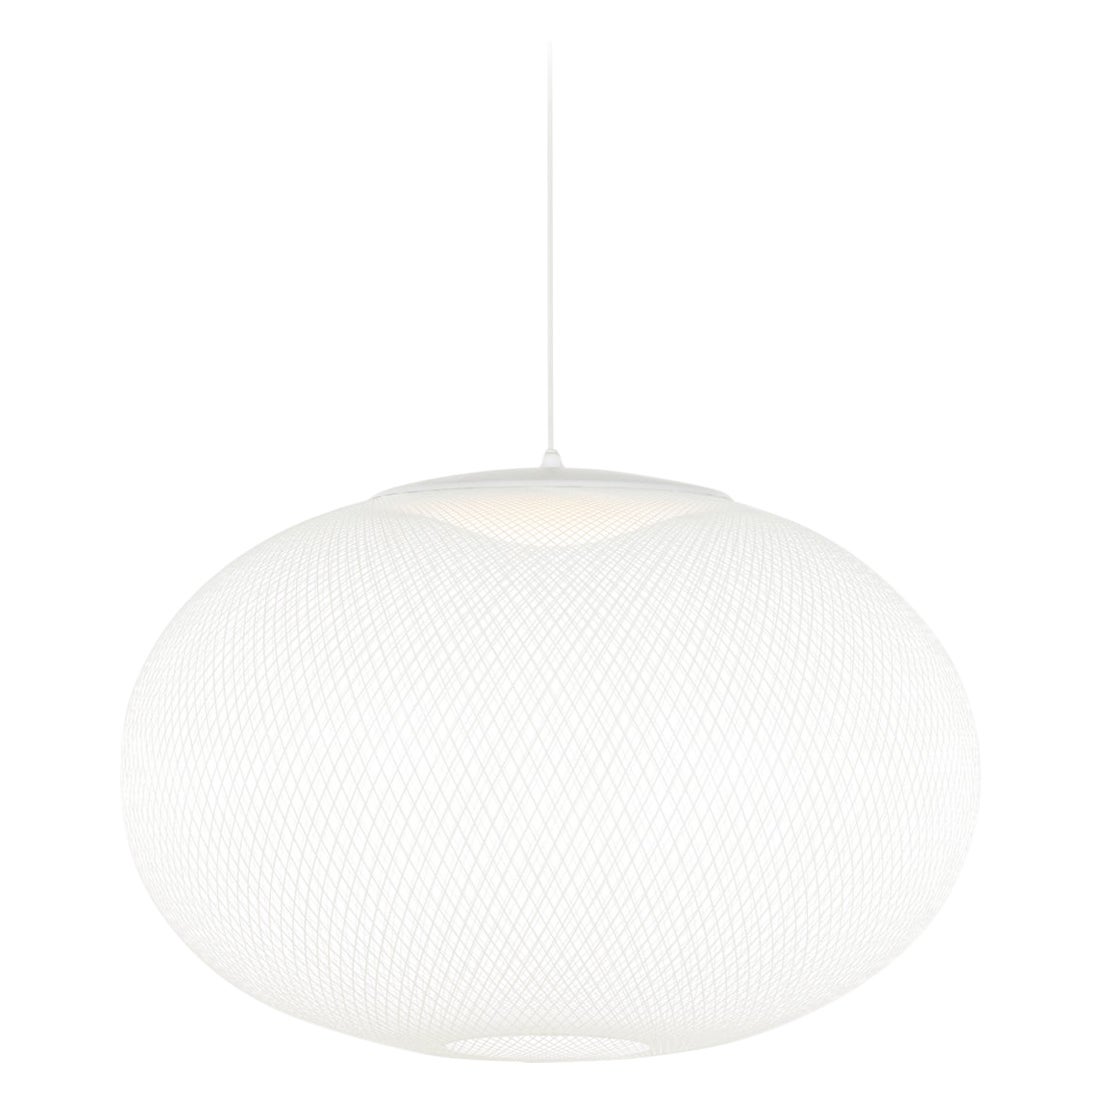 Moooi NR2 Large White LED Suspension Lamp in Aluminum and Fiberglass For Sale